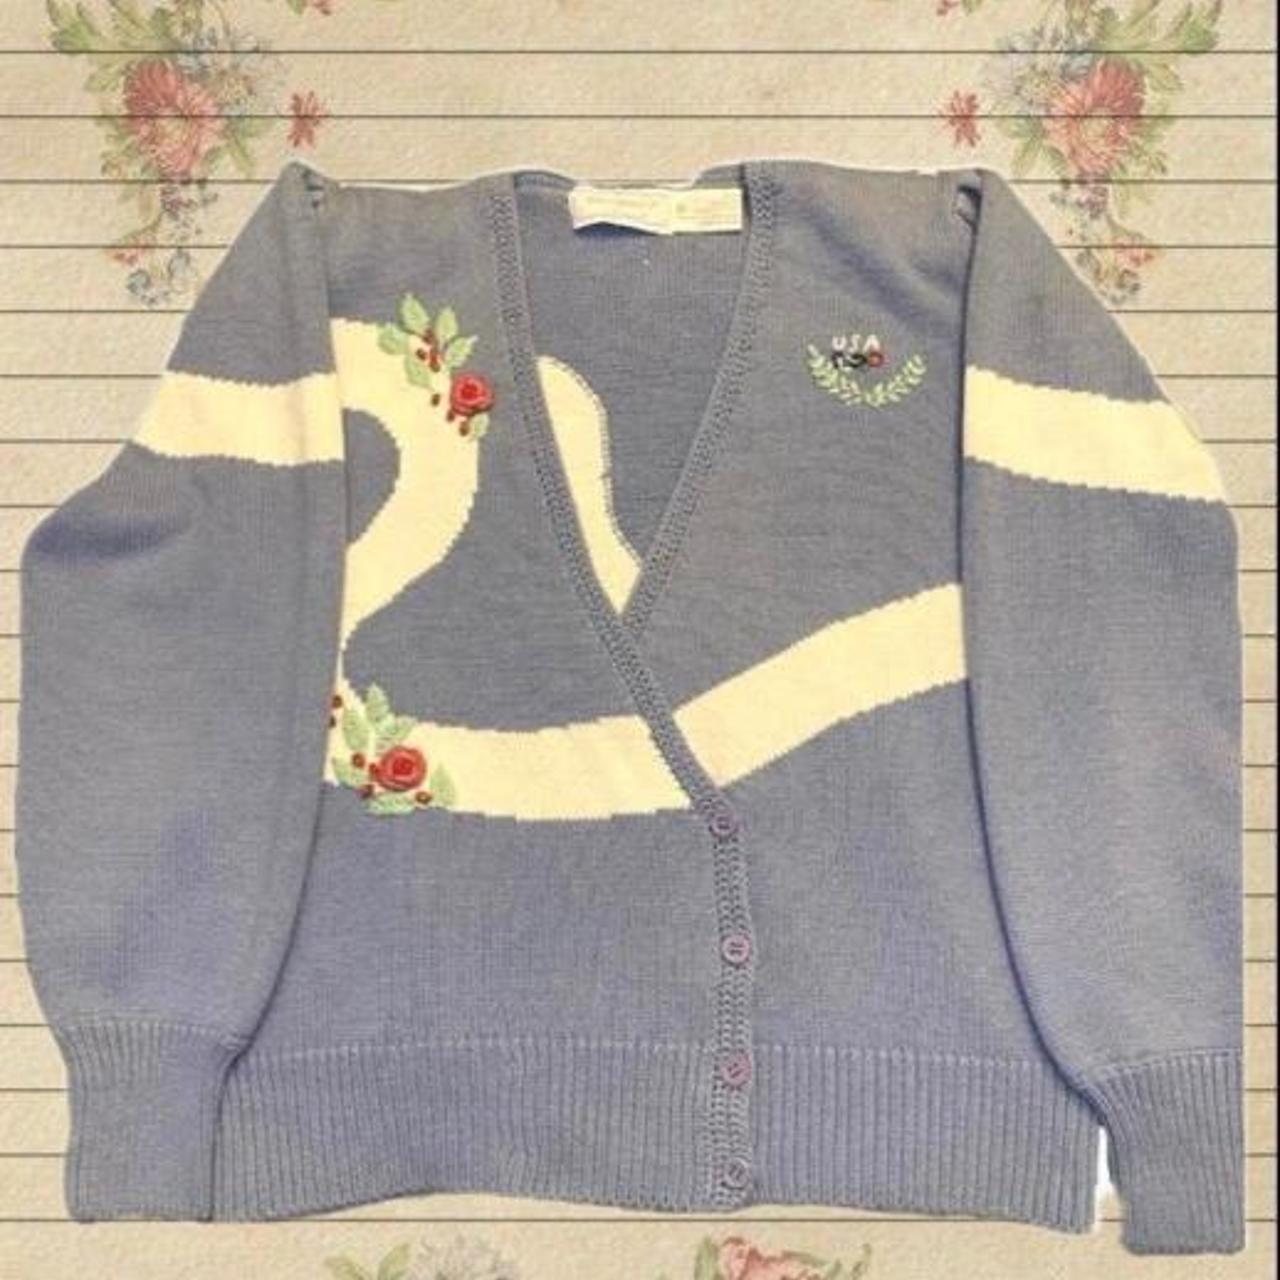 Rare Vintage Adidas Sweater 1988 Susan Bristol... - Depop